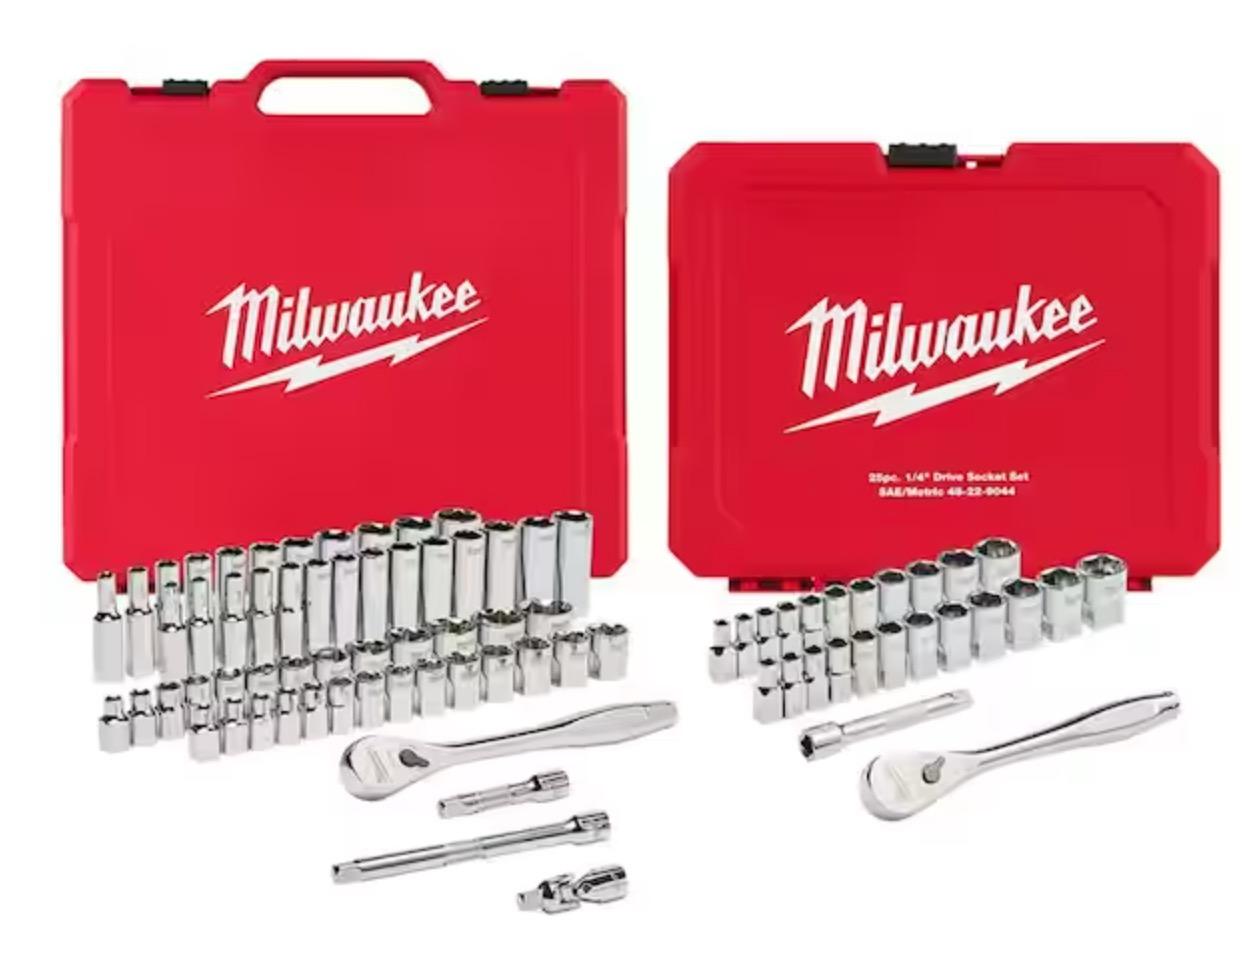 Milwaukee SAE Metric Ratchet Socket Mechanics Tool Set for $149 Shipped